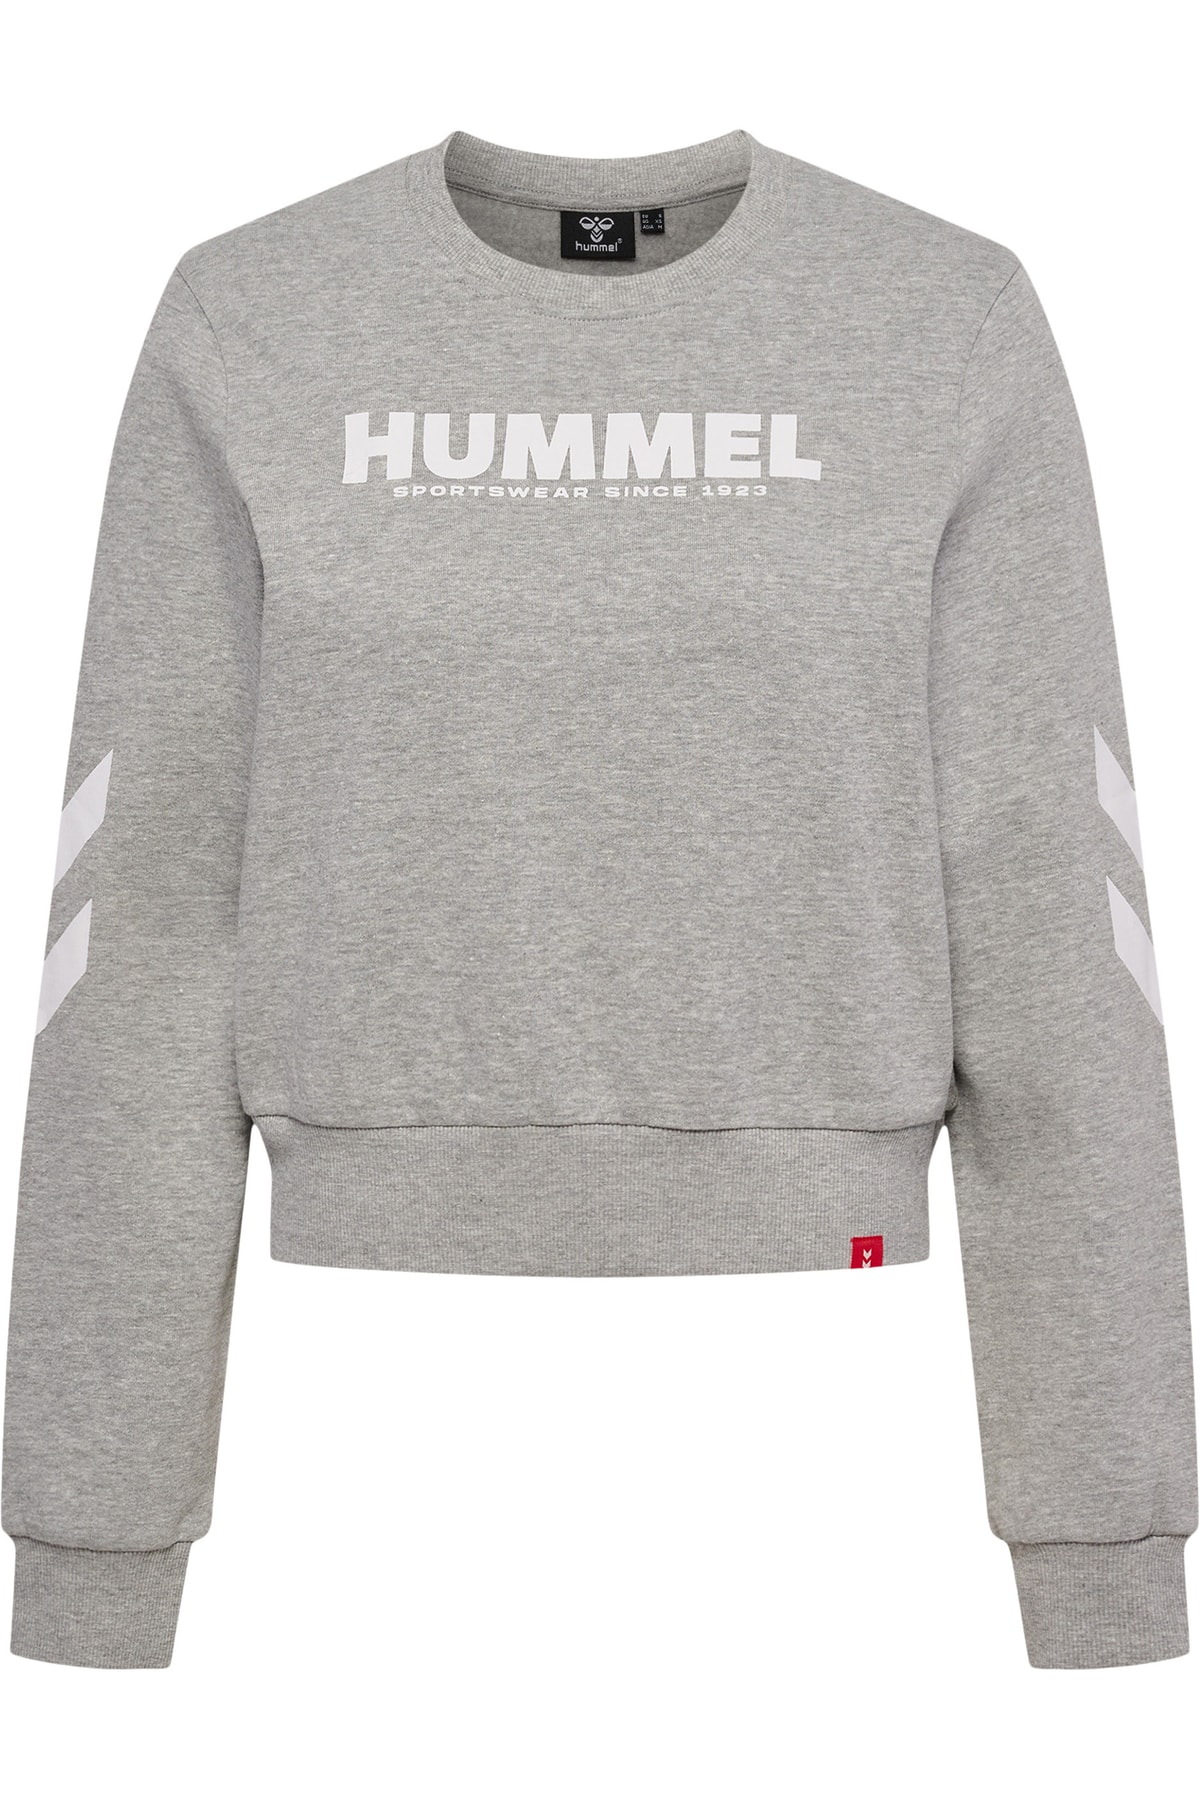 HUMMEL Sweatshirt Grau Relaxed Fit